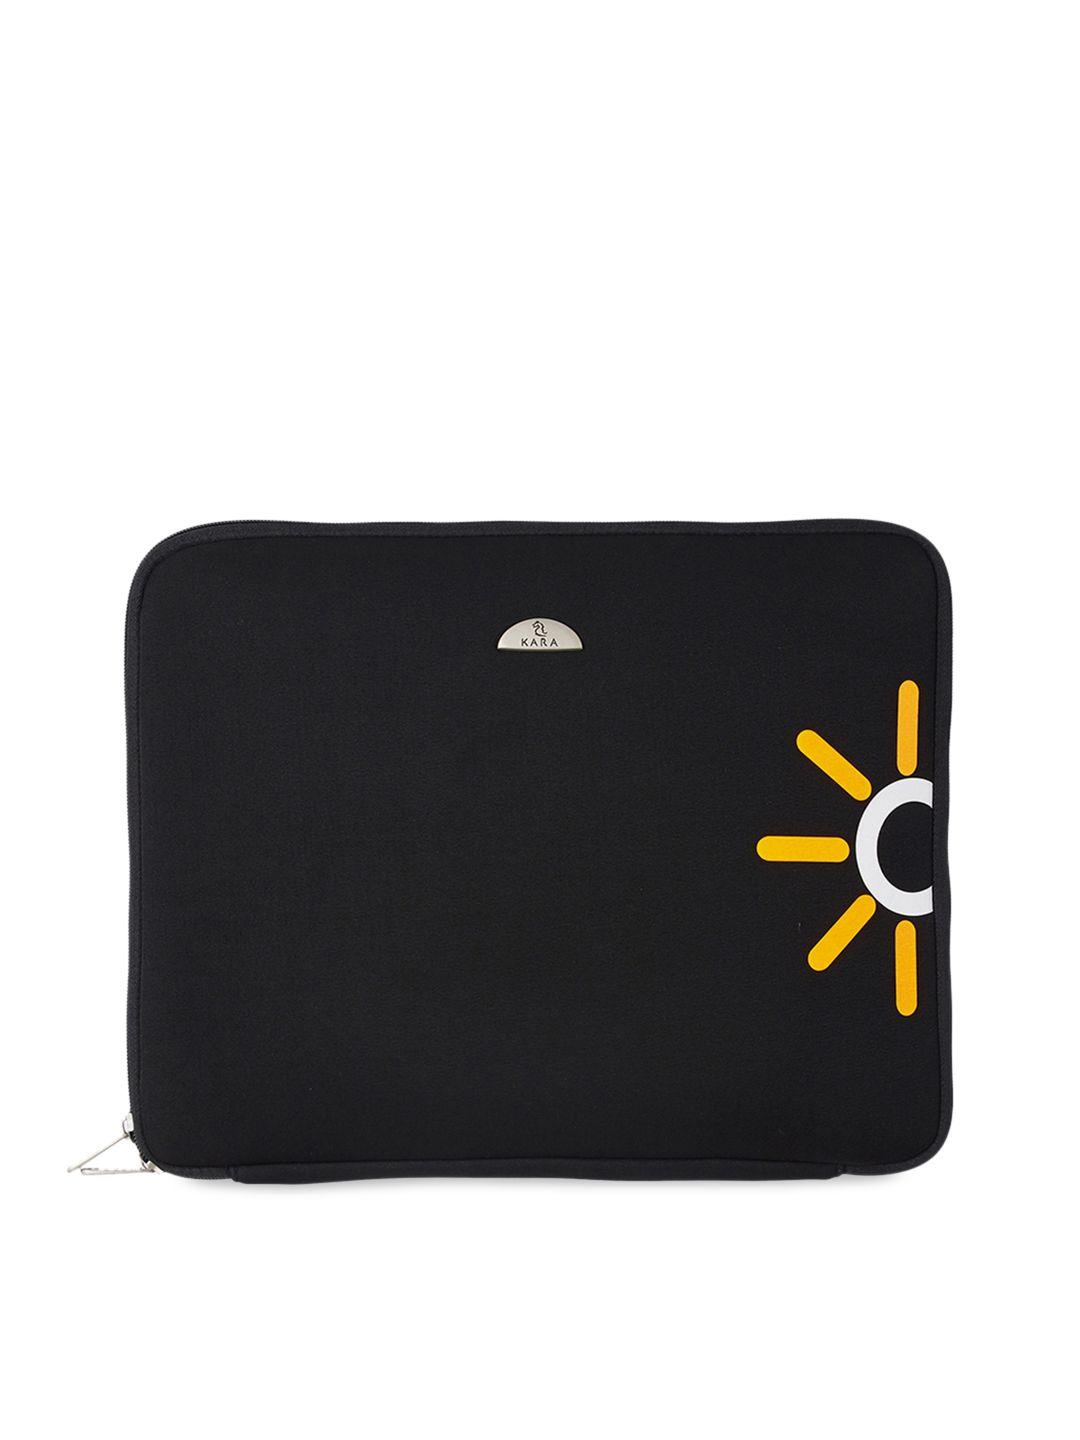 kara unisex black laptop sleeve